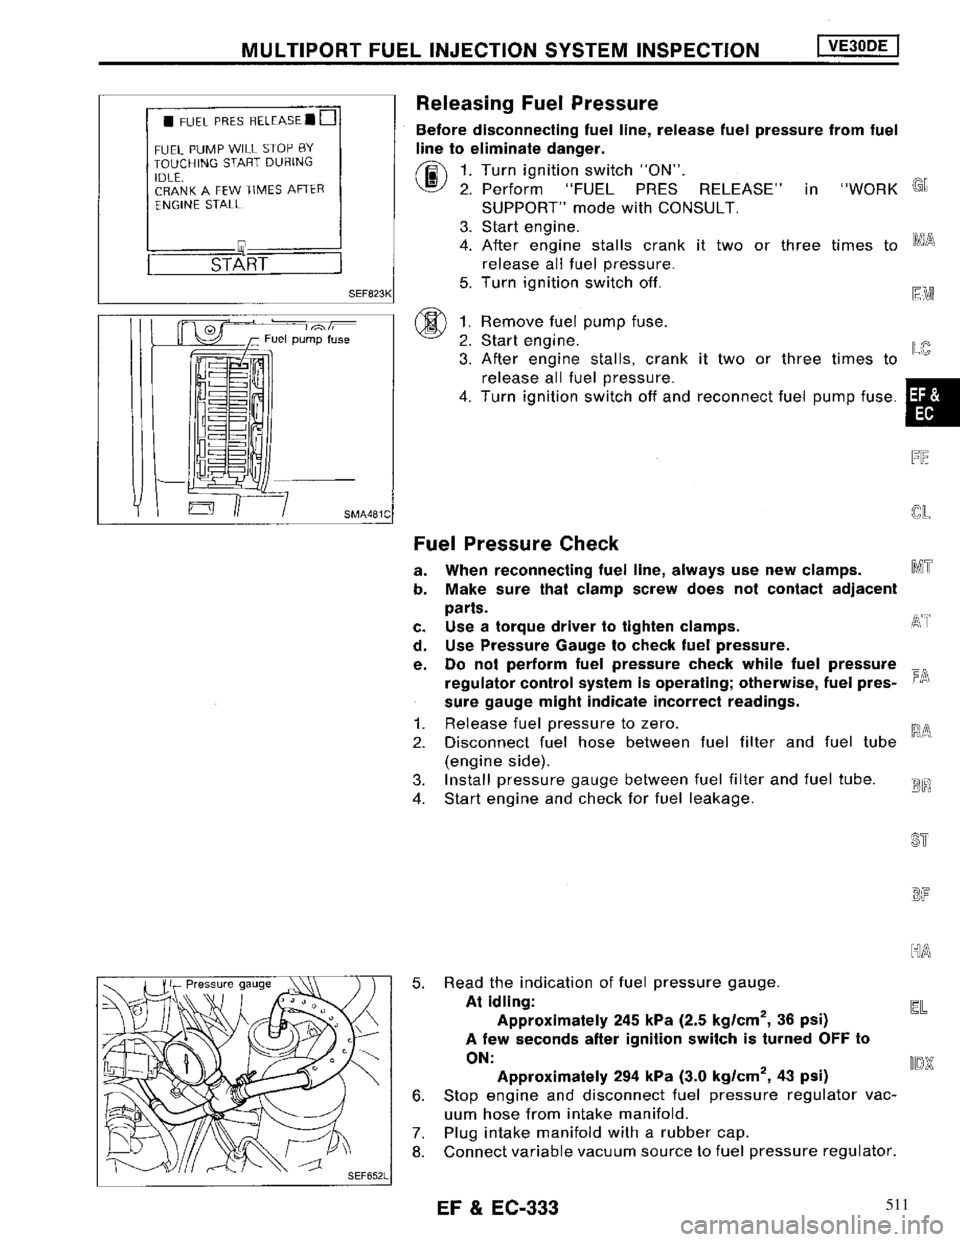 NISSAN MAXIMA 1994 A32 / 4.G Engine Fuel And Emission Control System Workshop Manual 511 